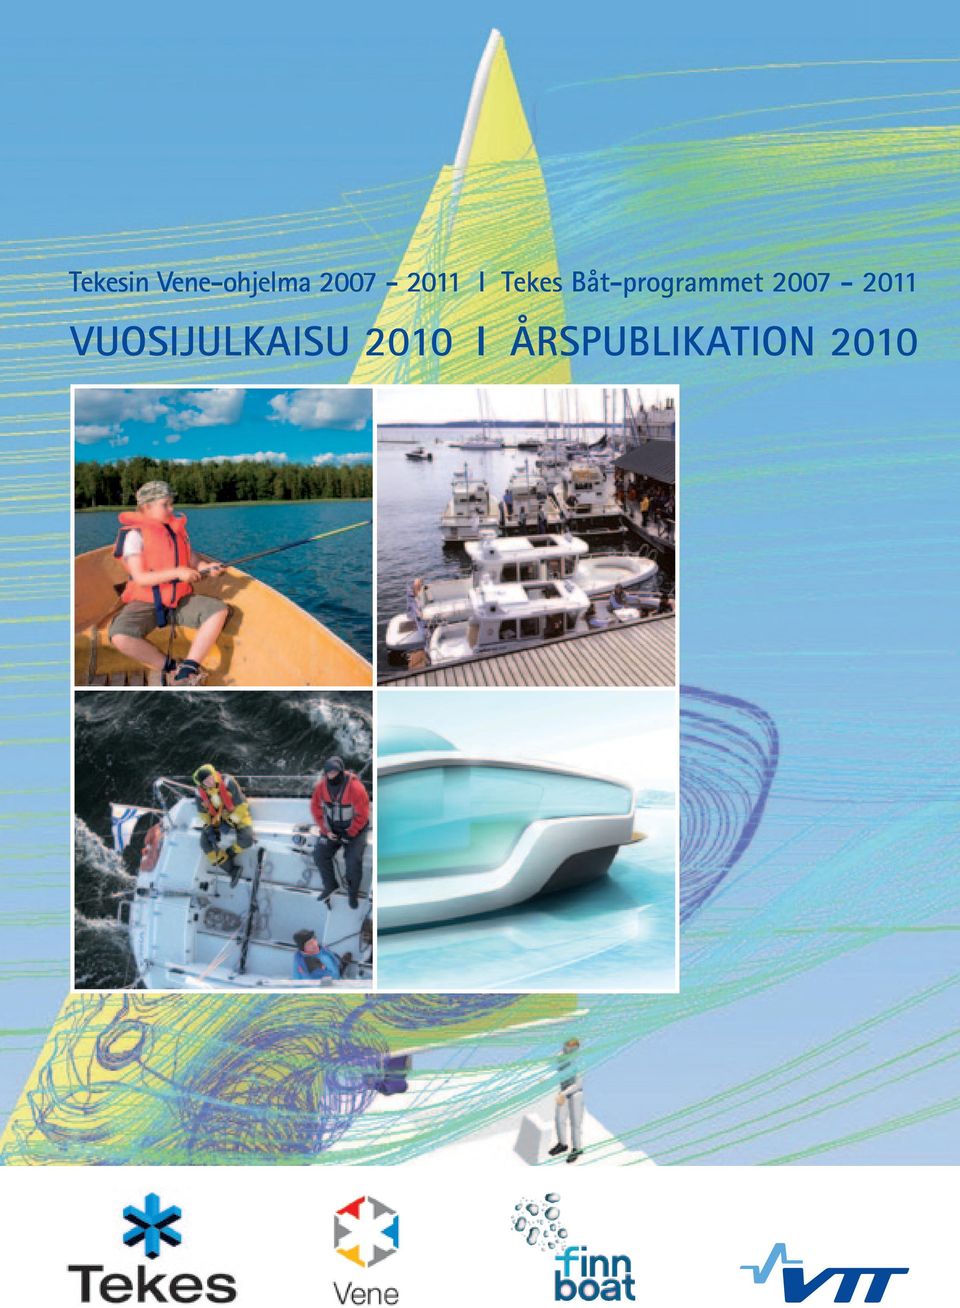 Båt-programmet 2007-2011